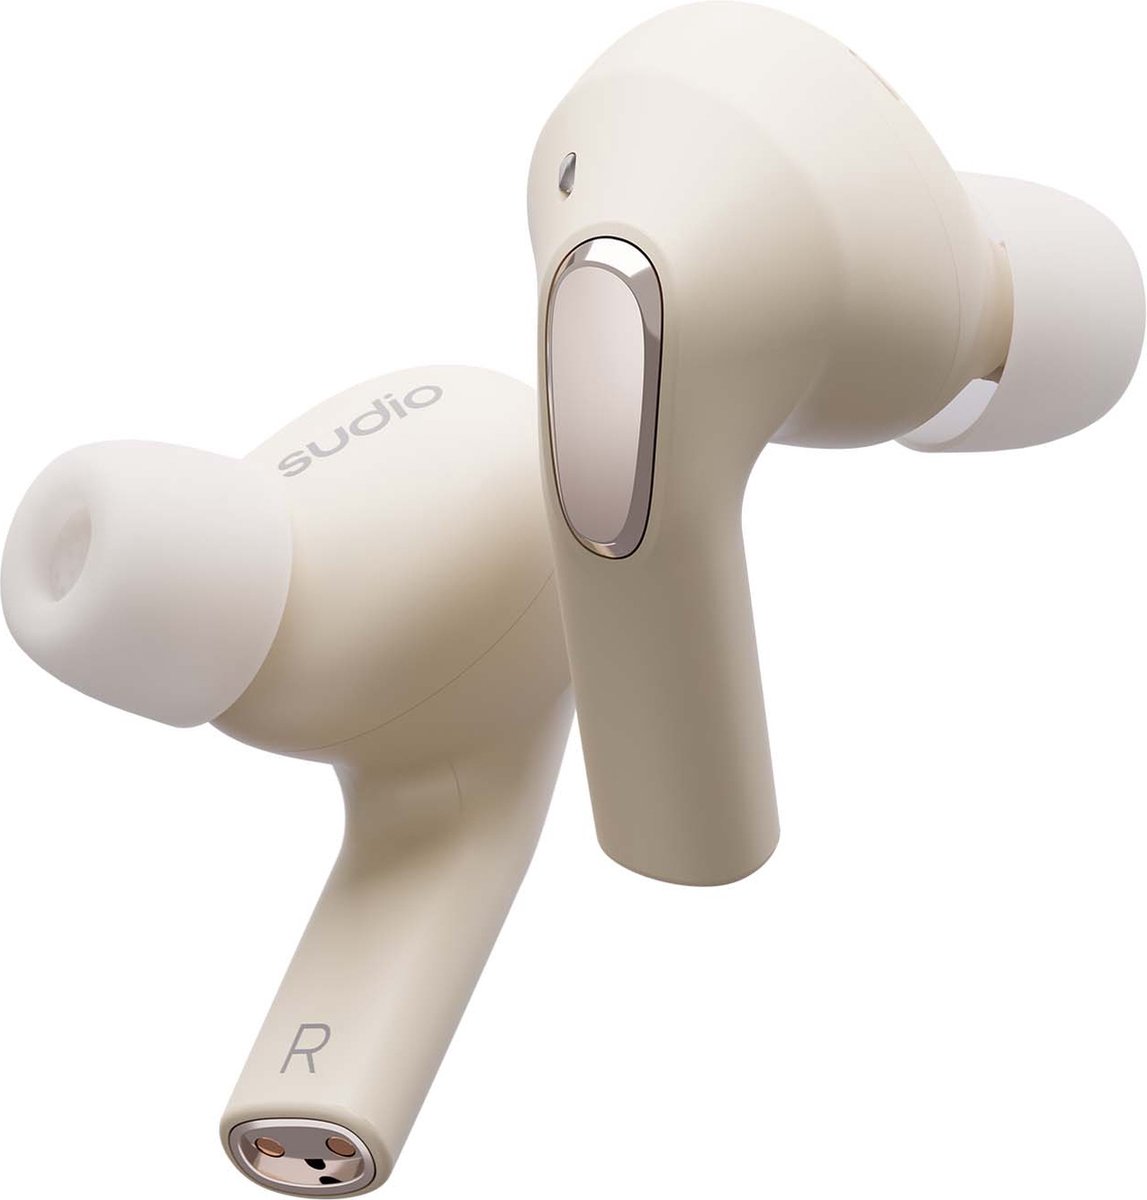 Sudio E2 in-ear true wireless earphones - draadloze oordopjes - met active noice cancellation (ANC) - beige